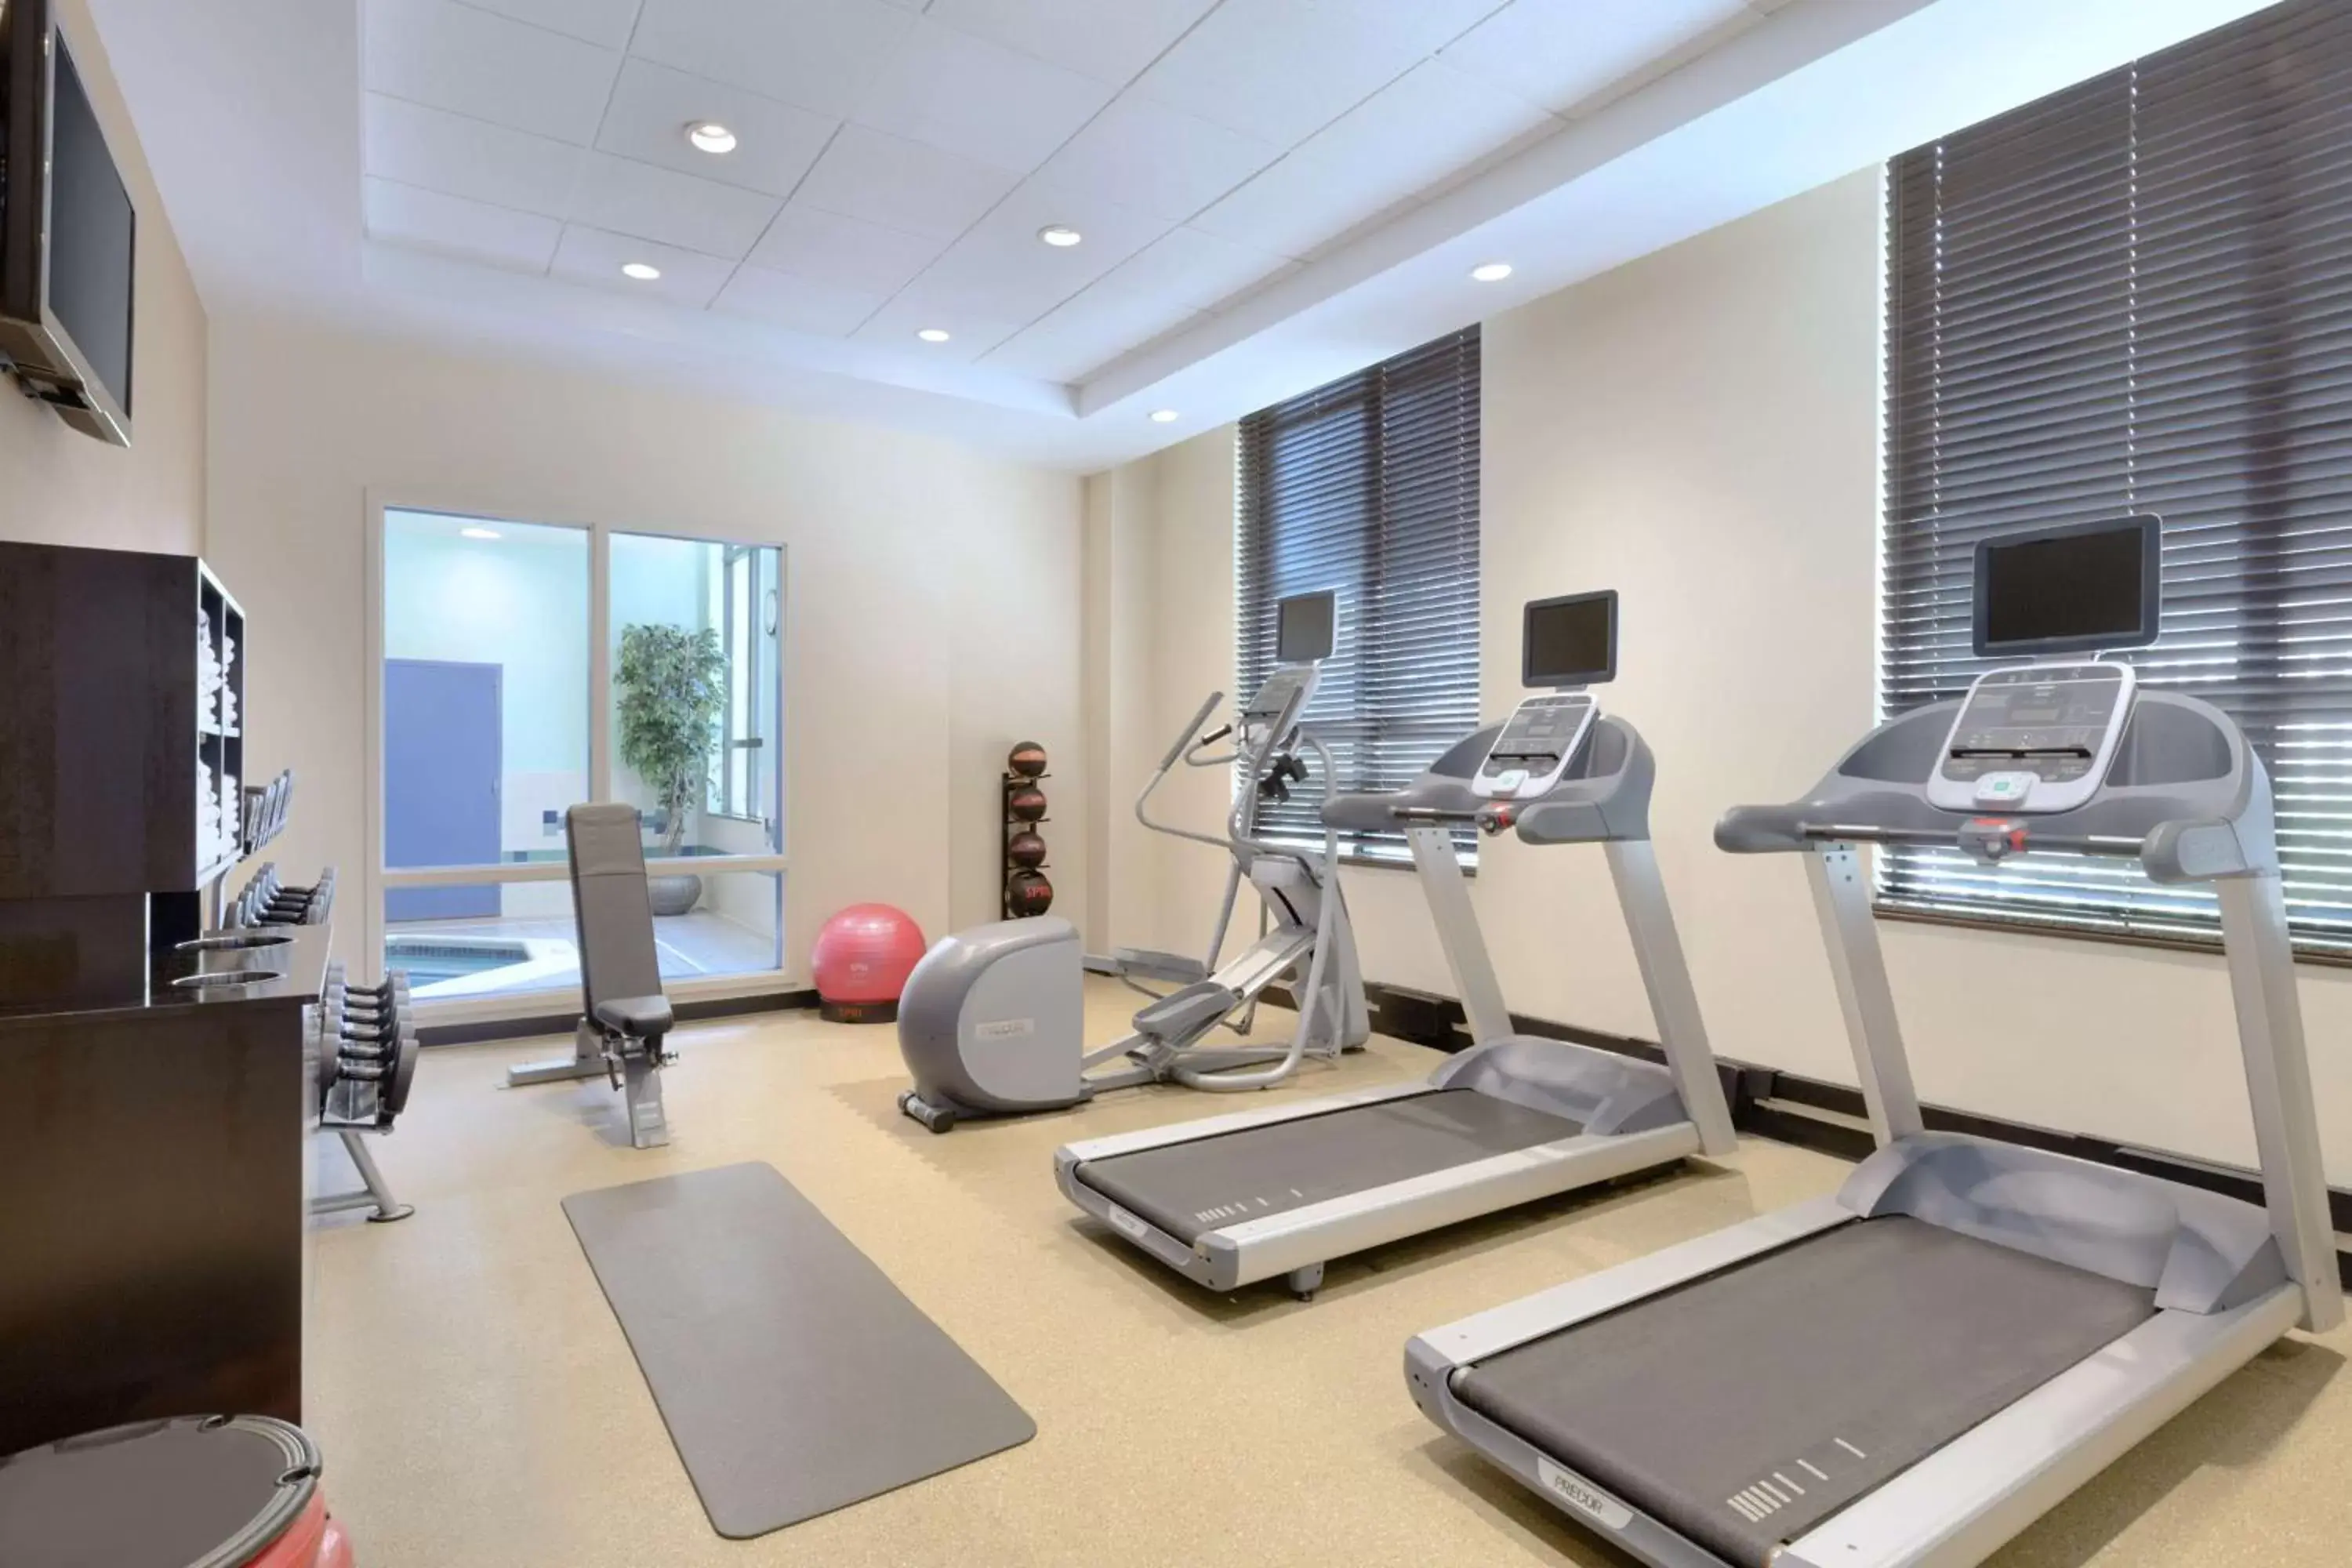 Fitness centre/facilities, Fitness Center/Facilities in Hilton Garden Inn Worcester